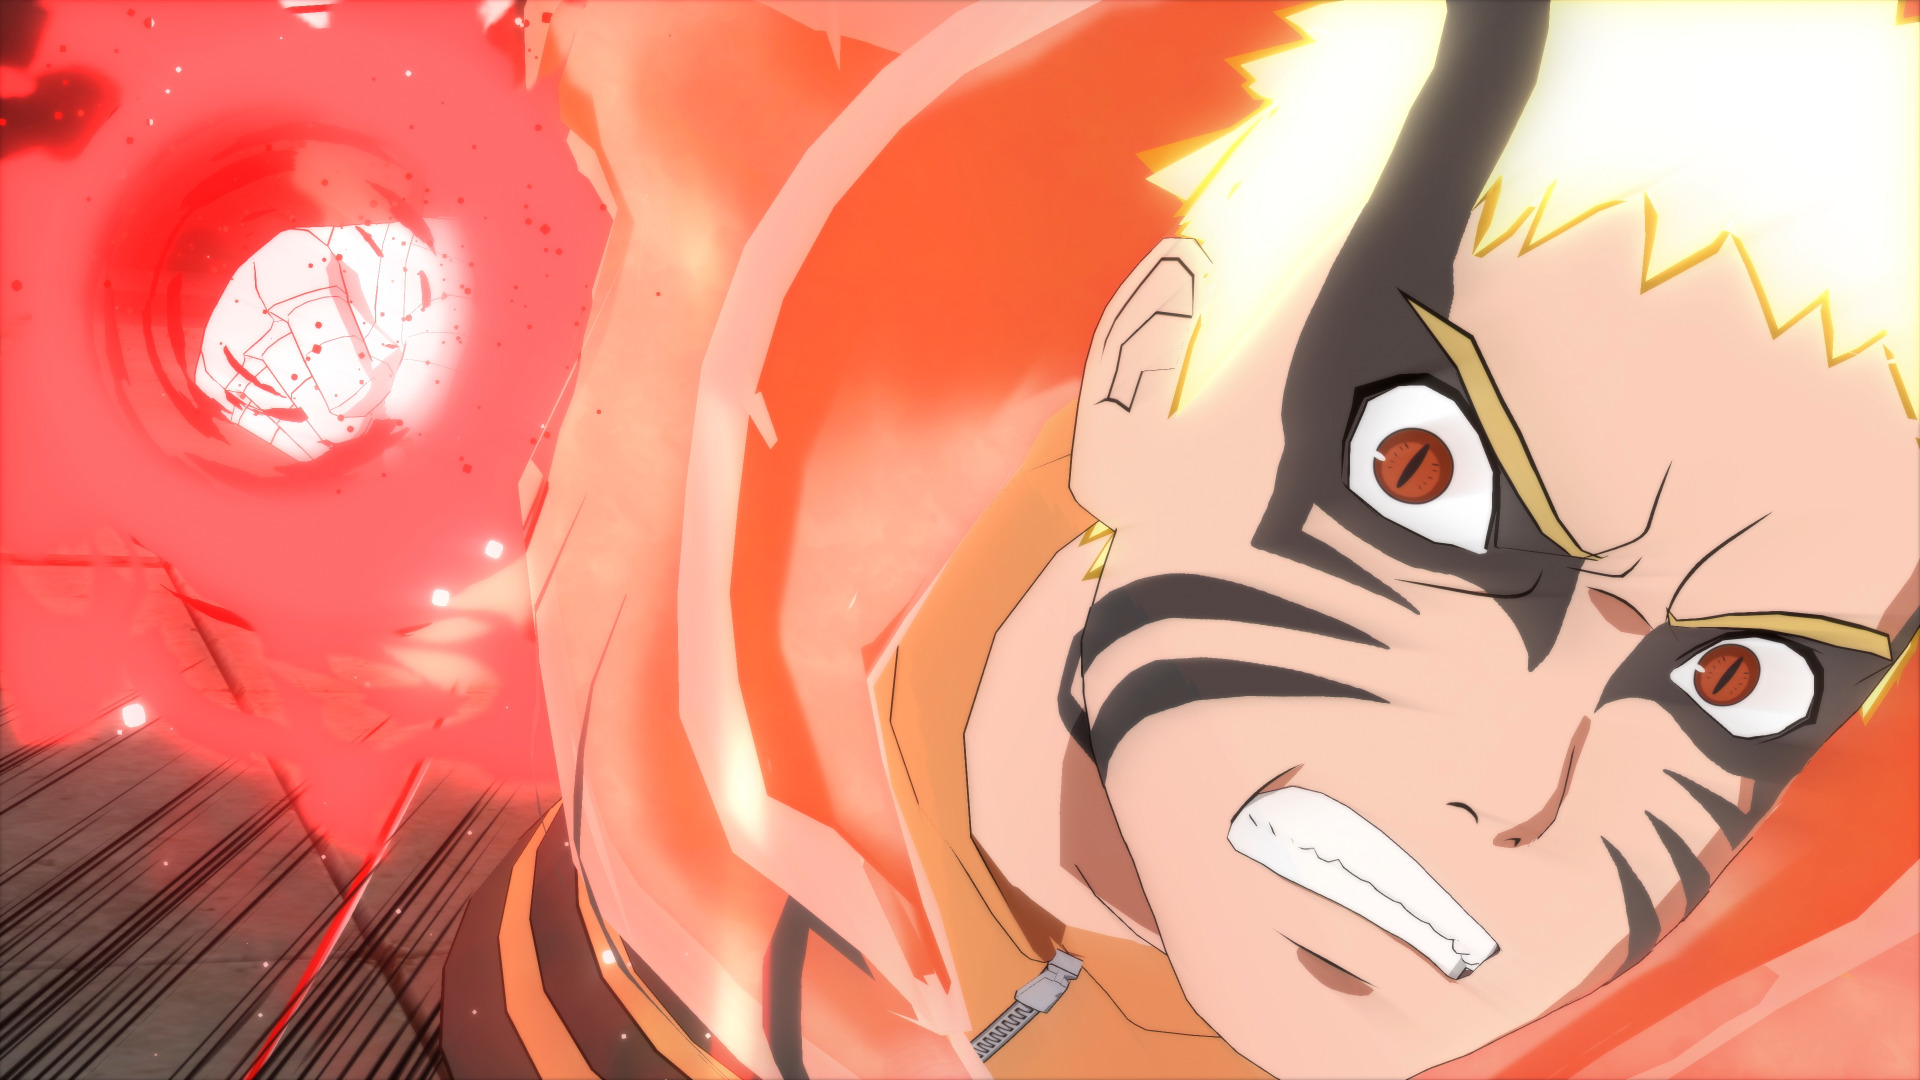 Naruto Ultimate Ninja Storm 5 - a new Naruto game is possibly coming soon